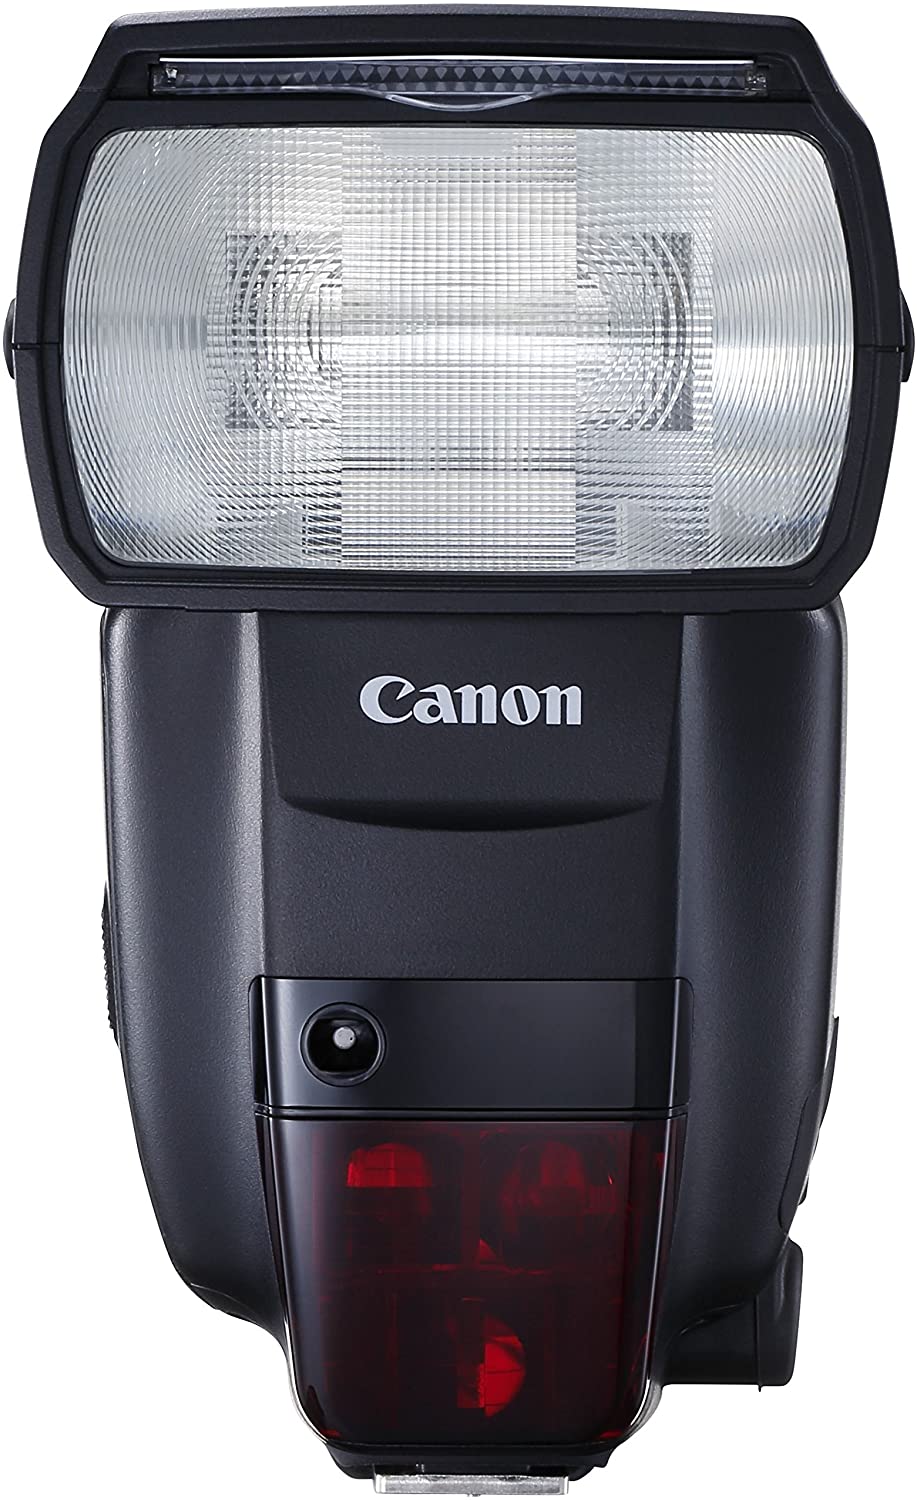 Canon Speedlite 600EX II-RT Flash